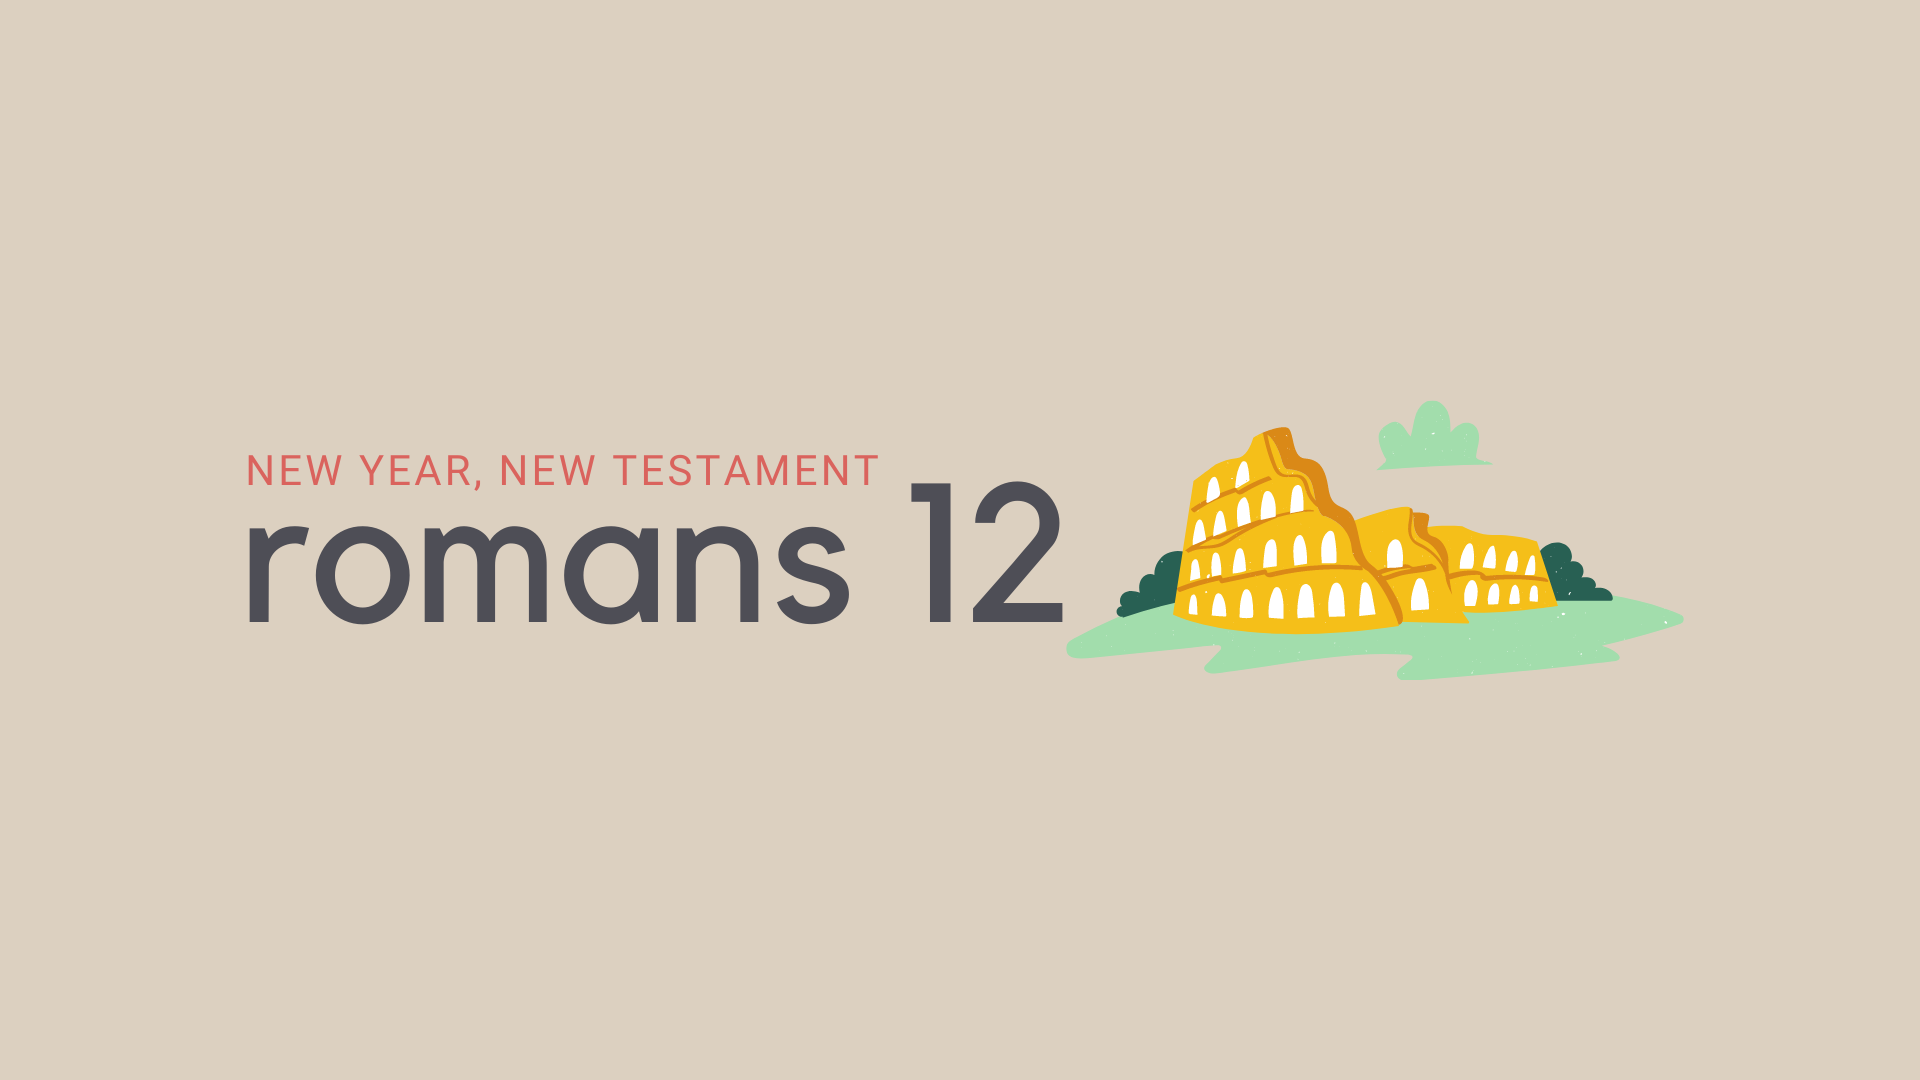 July 2: Romans 12